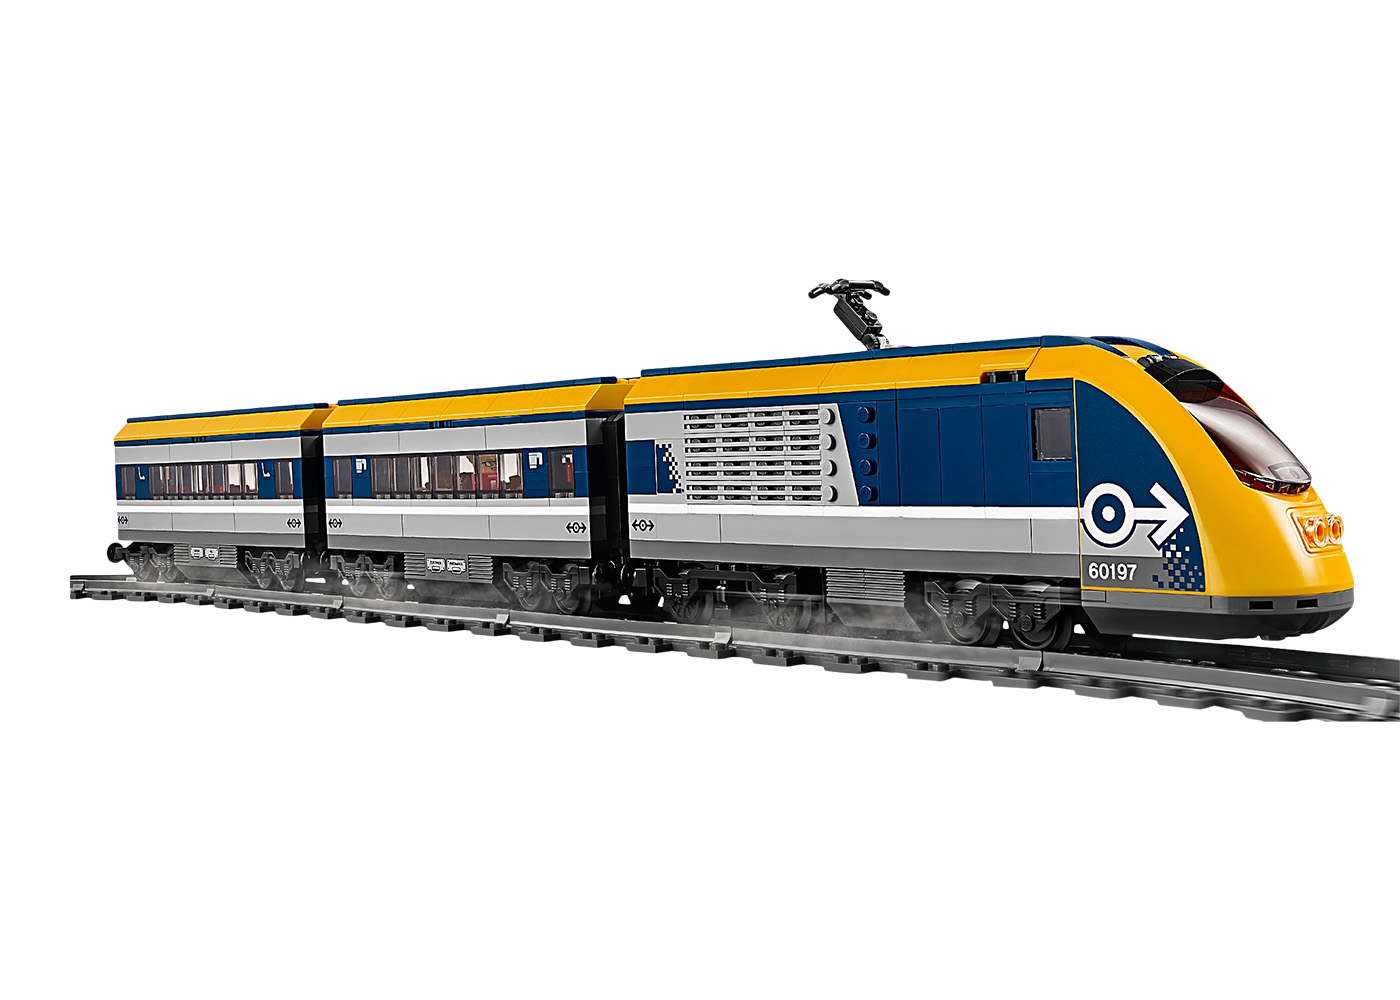 LEGO City Passenger Train Set 60197 - US